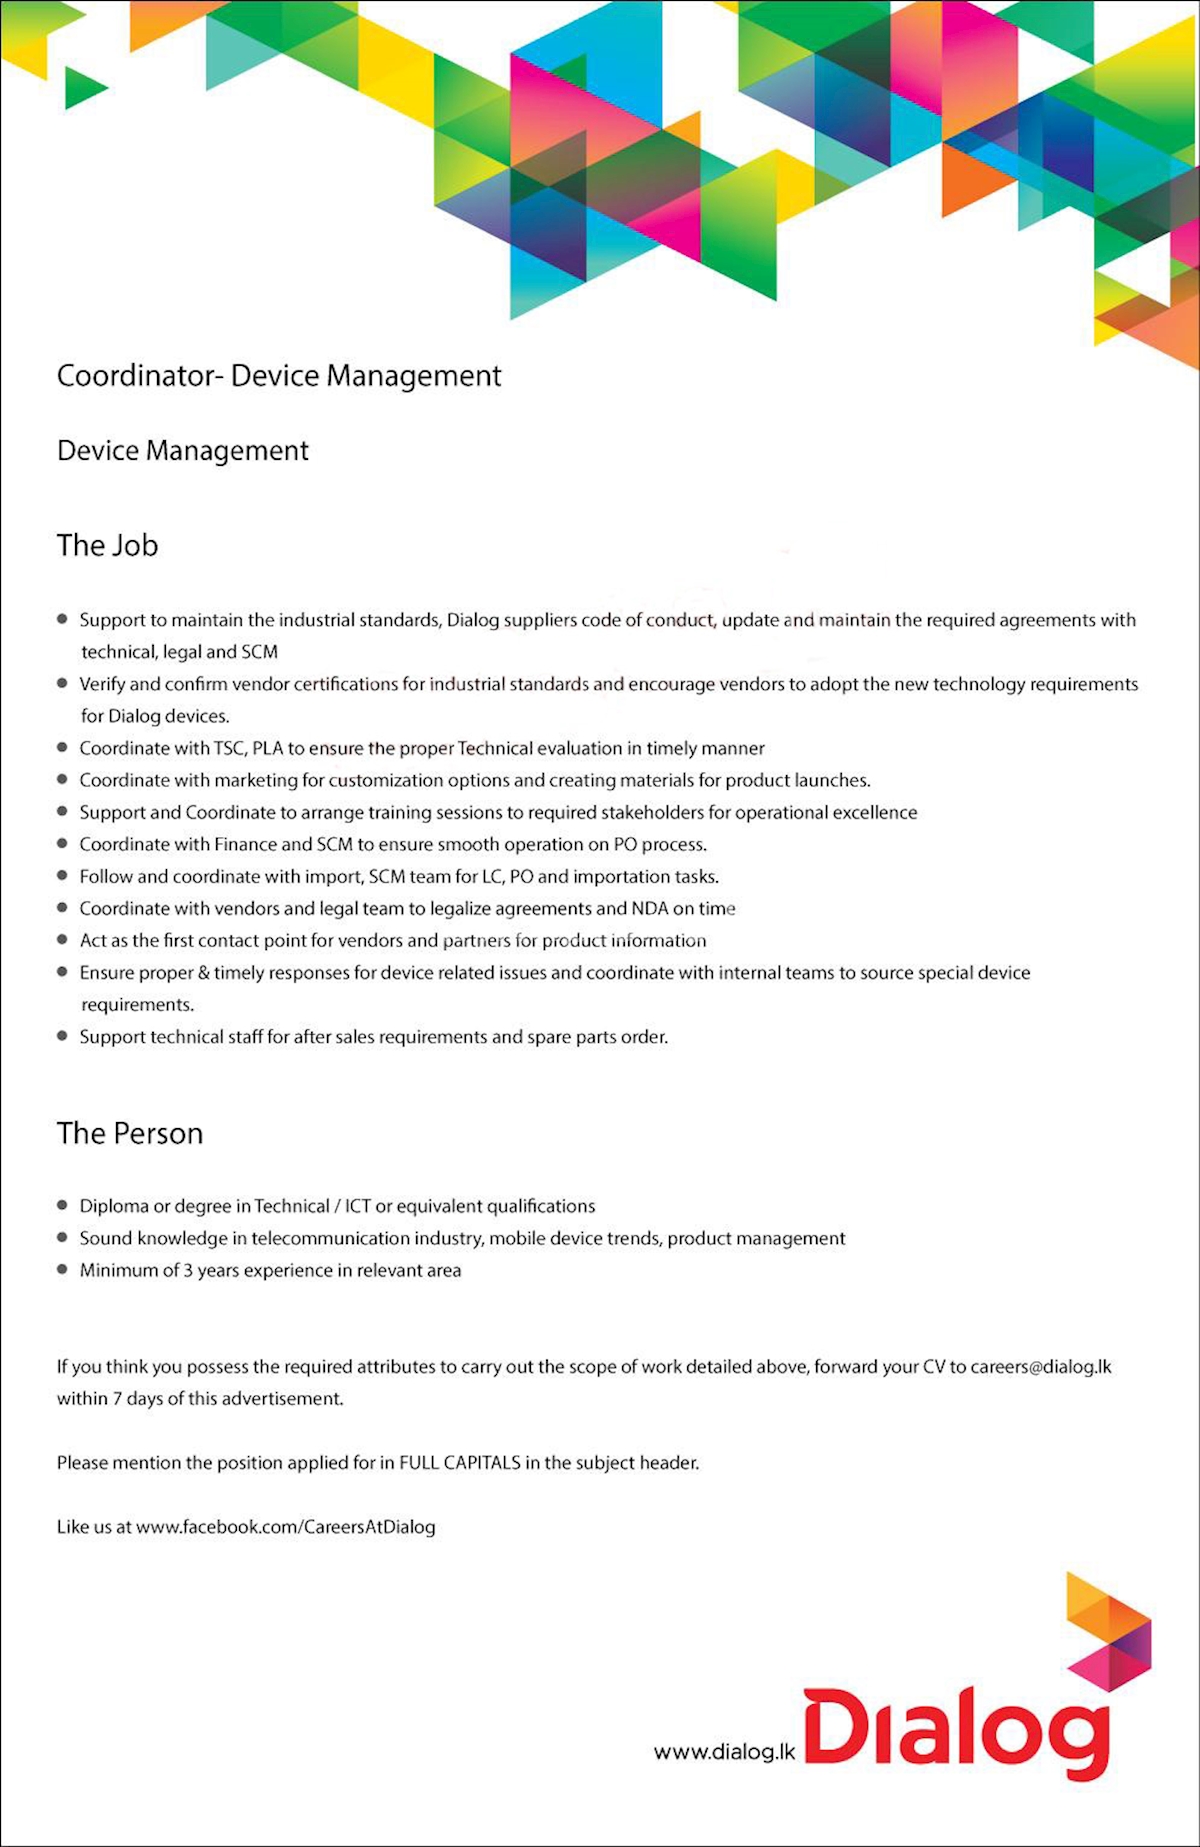 Coordinator - Device Management